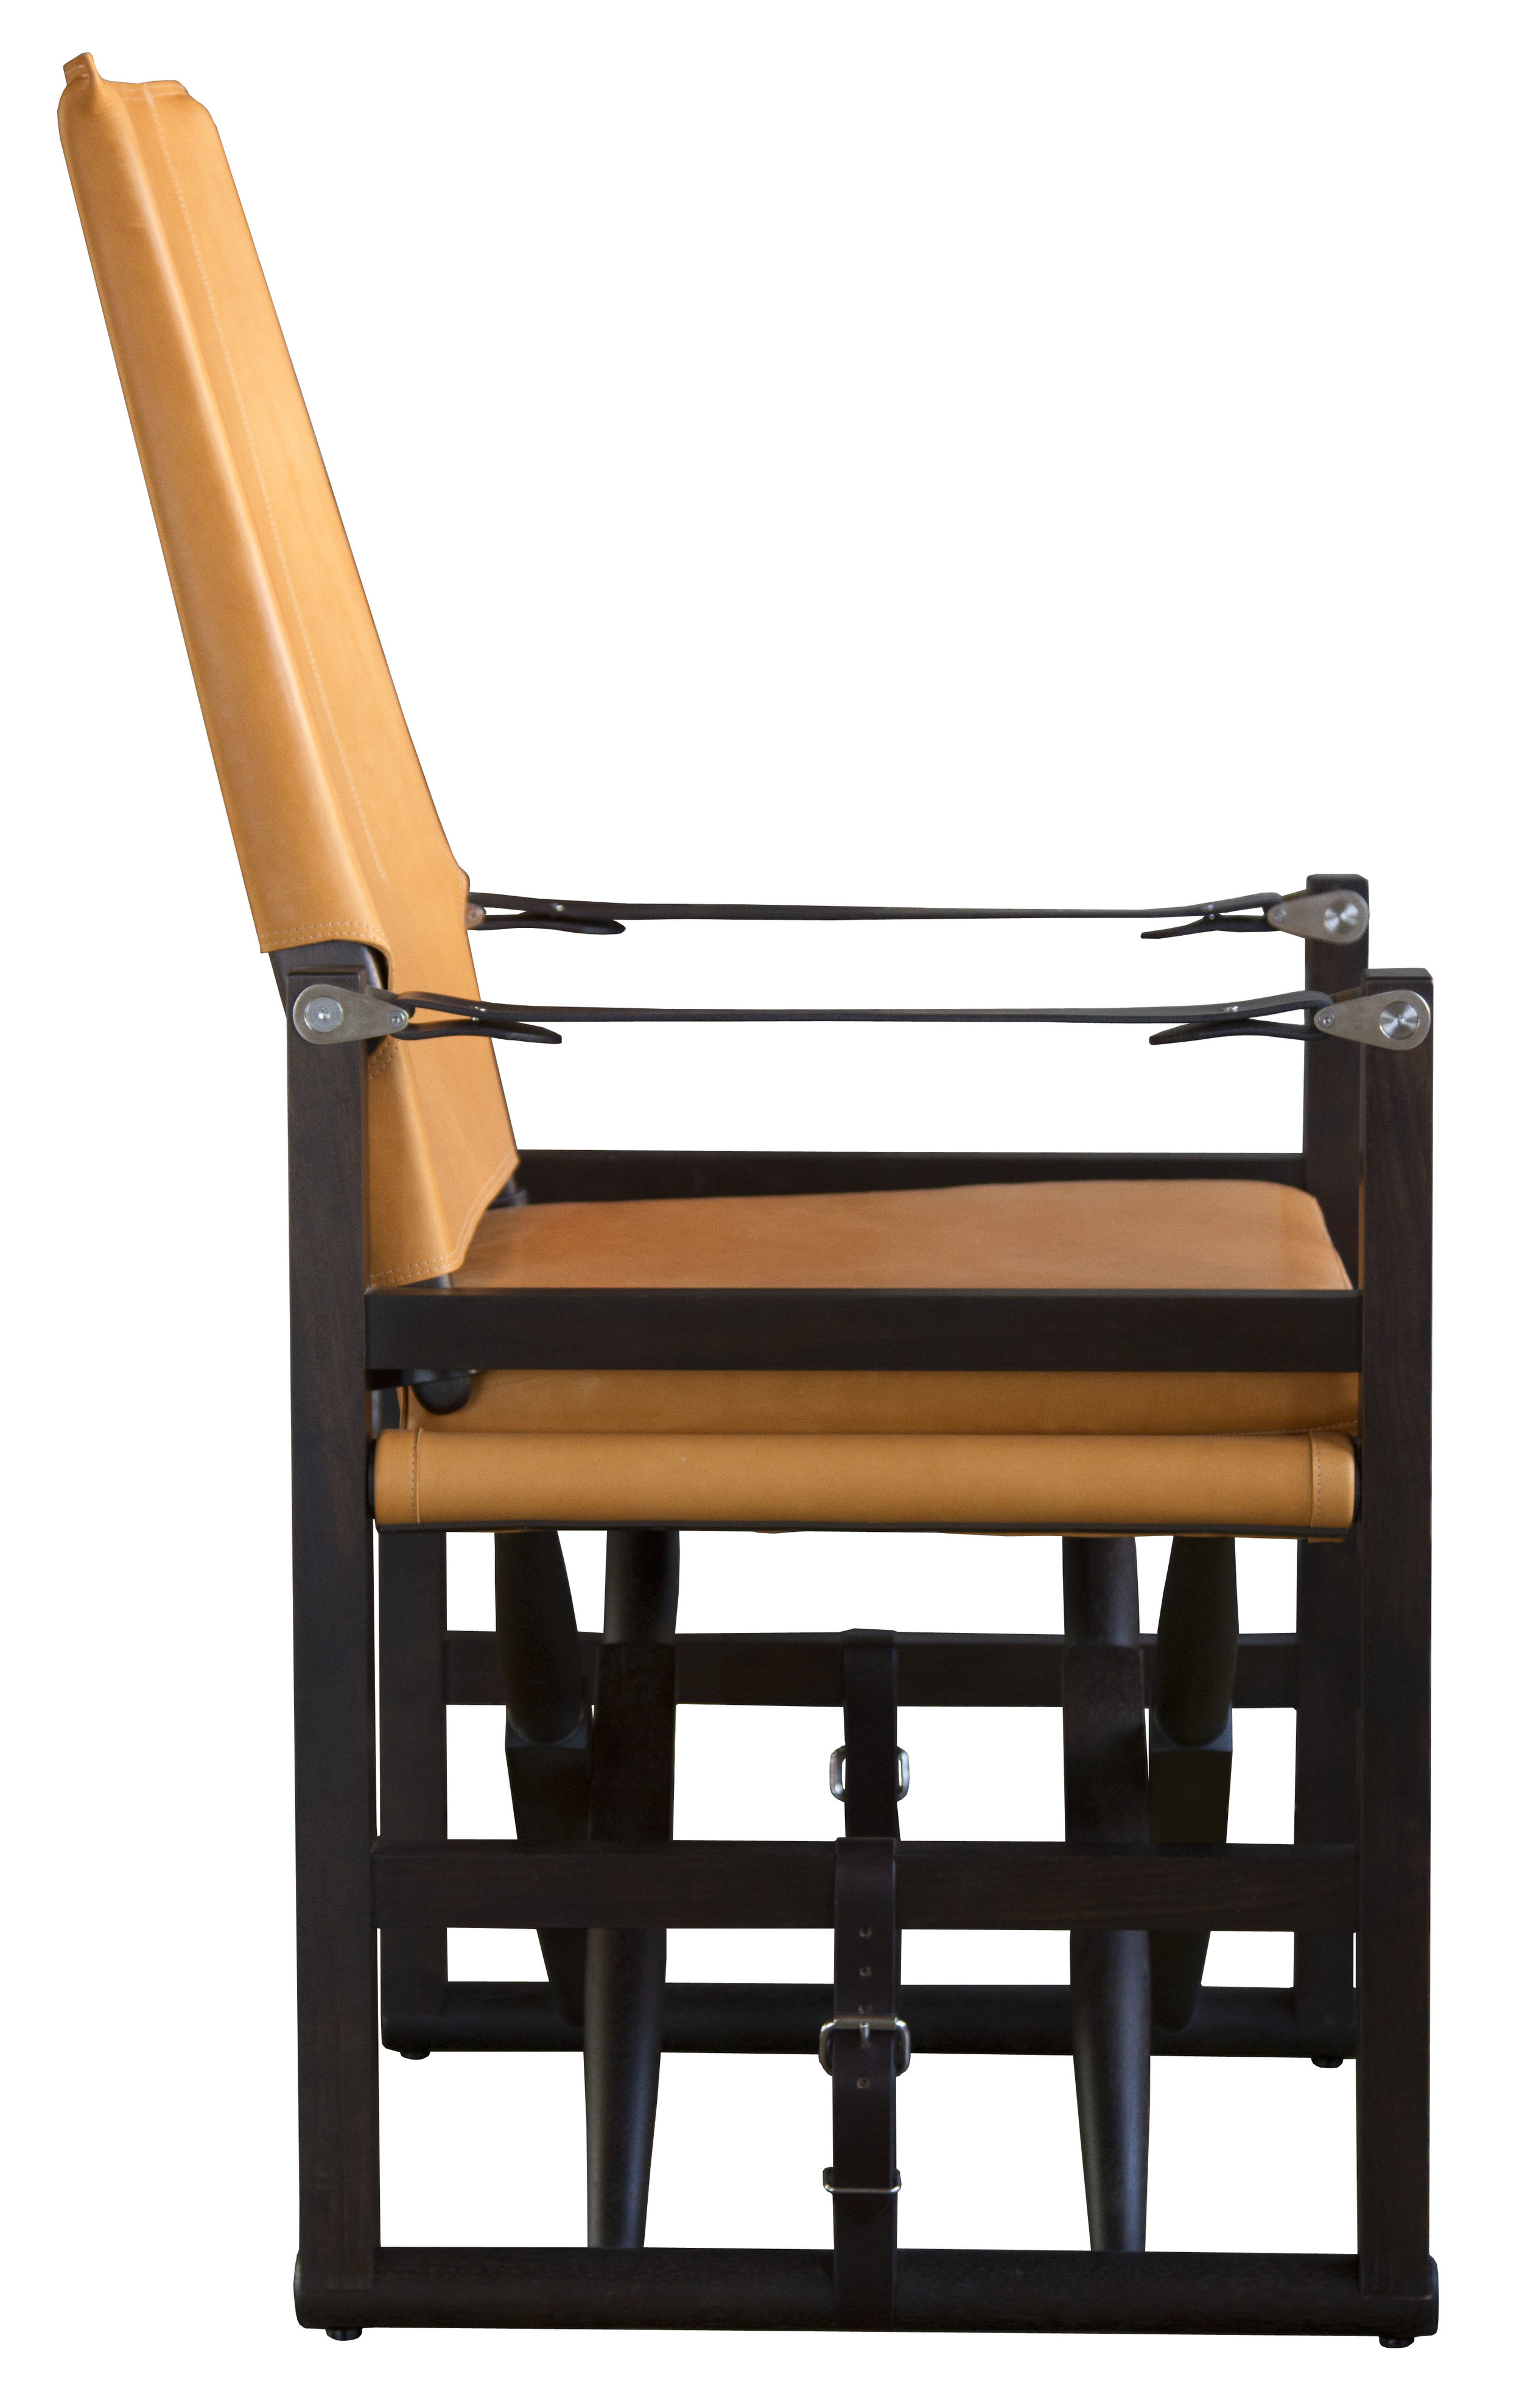 Cabourn Sail Chair - folding